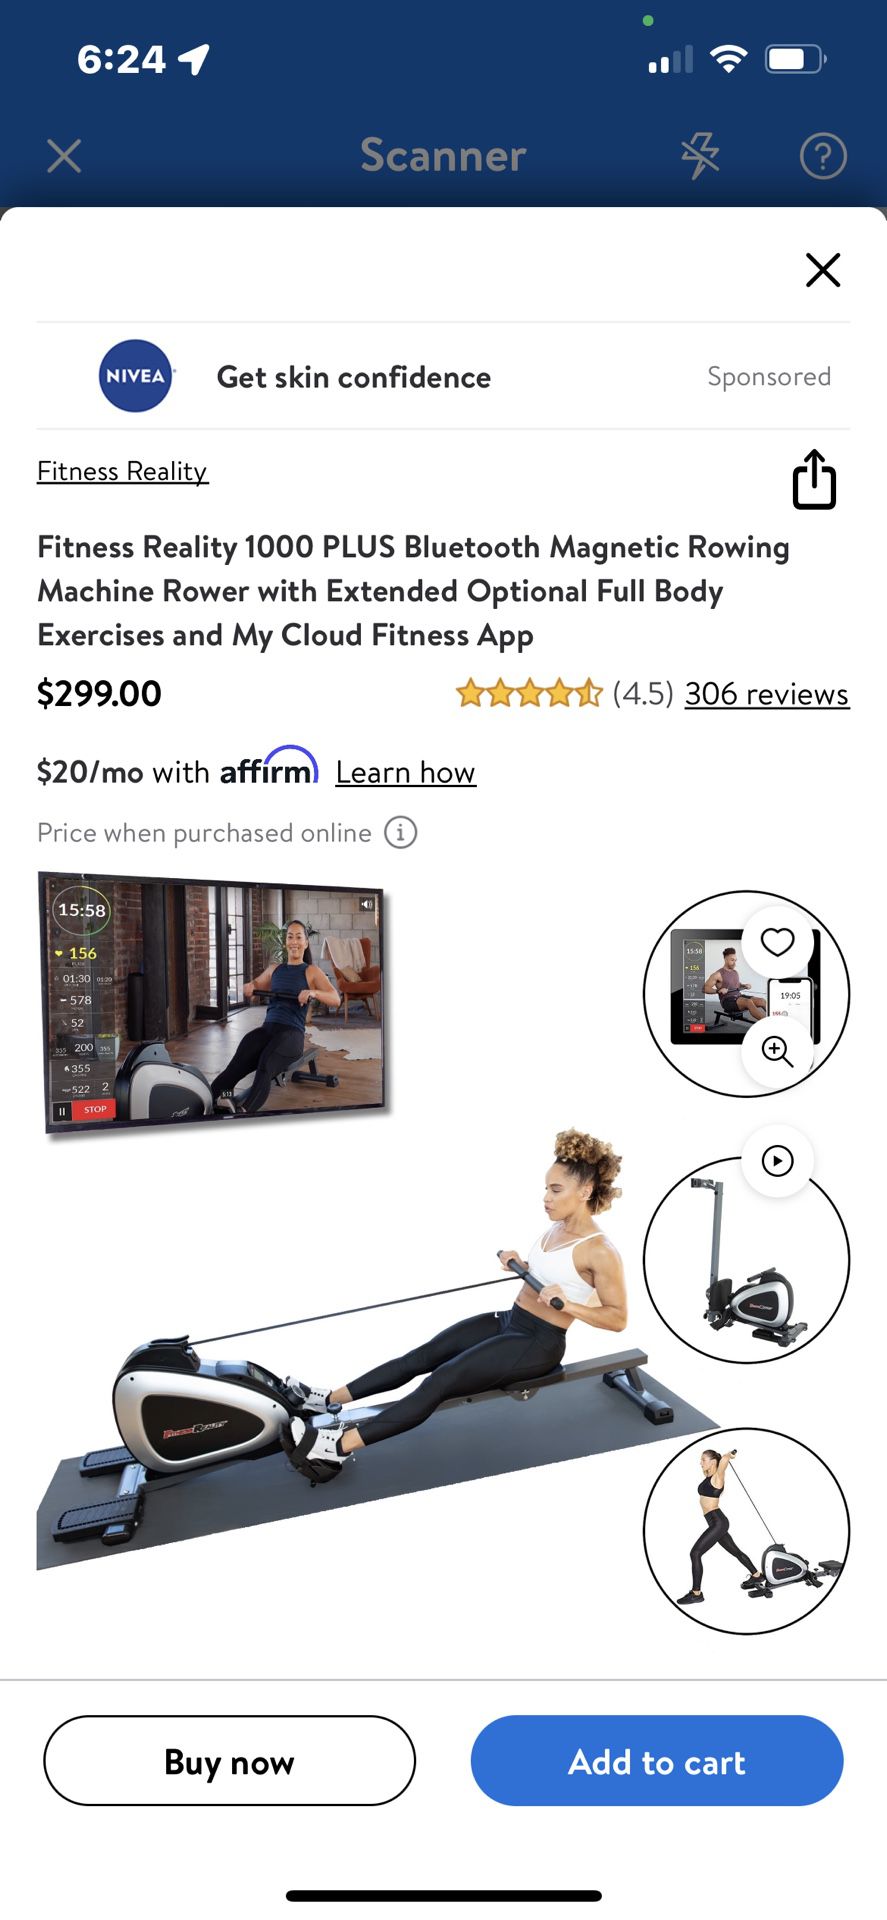 Fitness Reality 1000 Rowing Machine